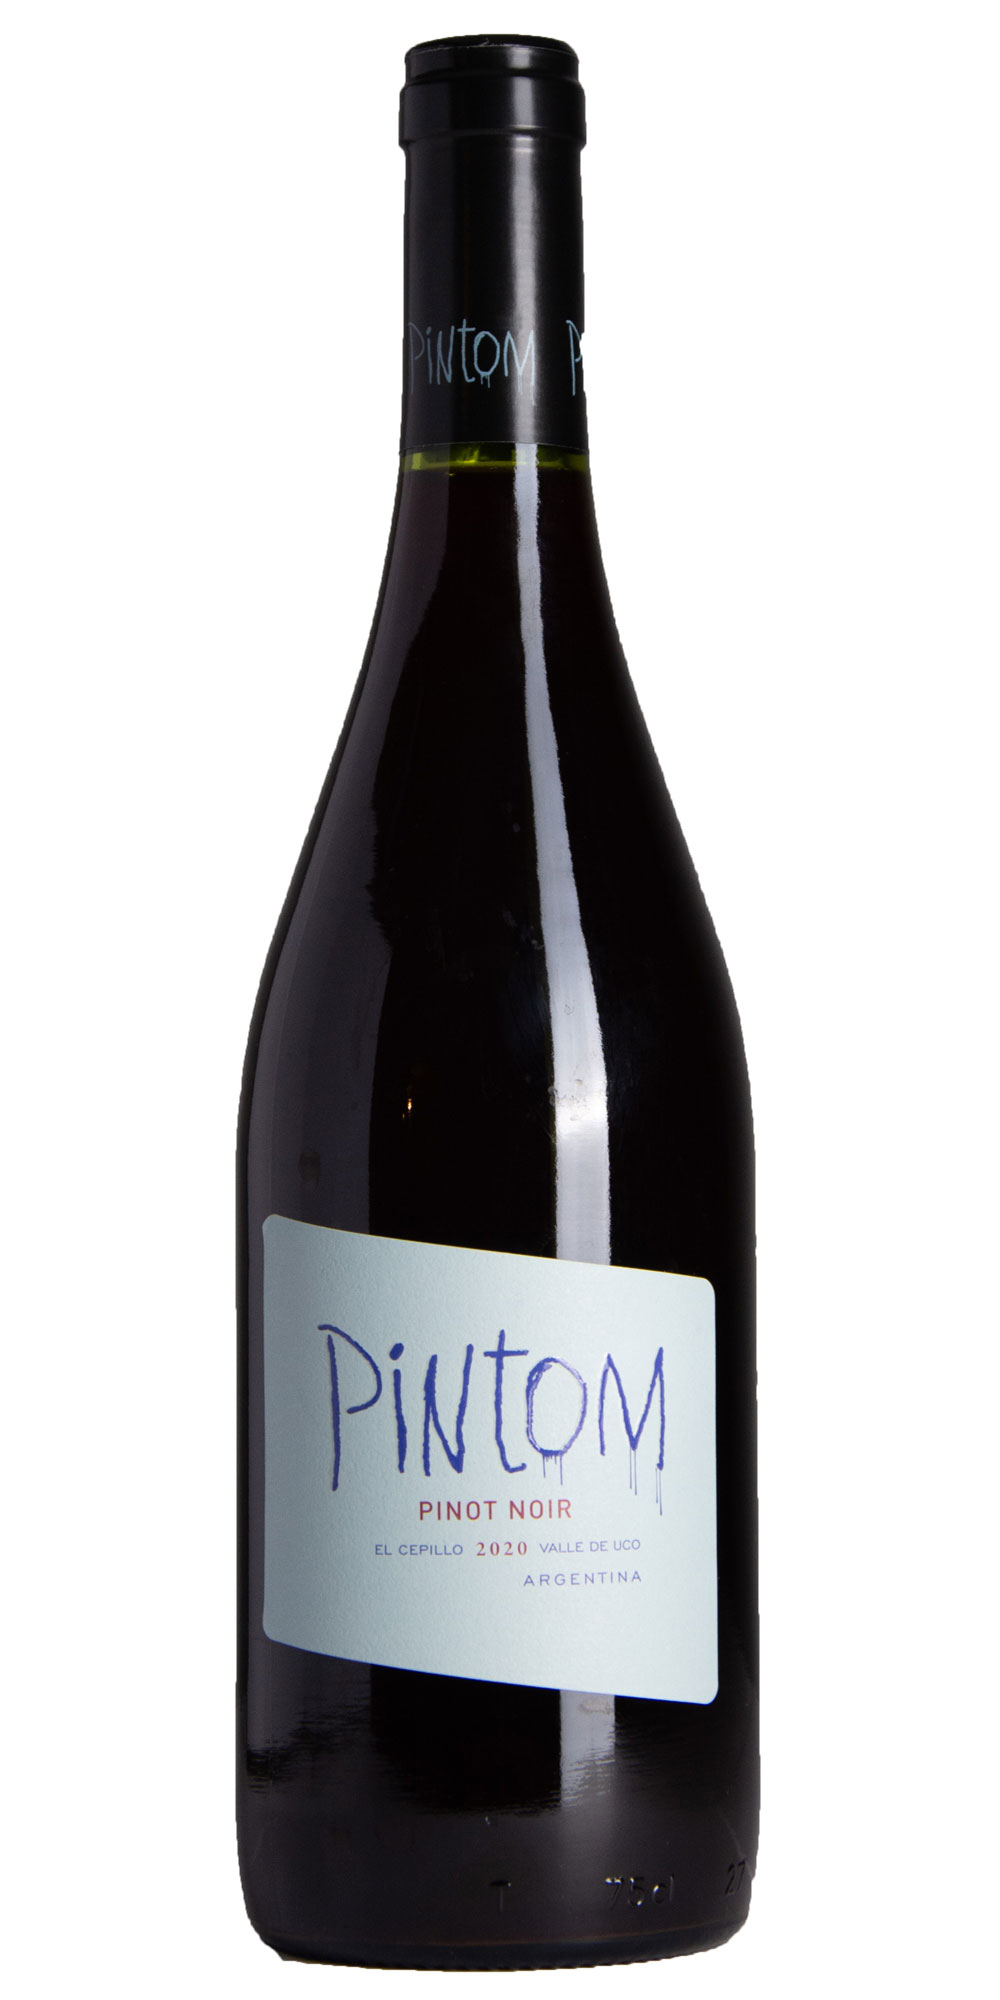 Pinot Noir "Pintom"